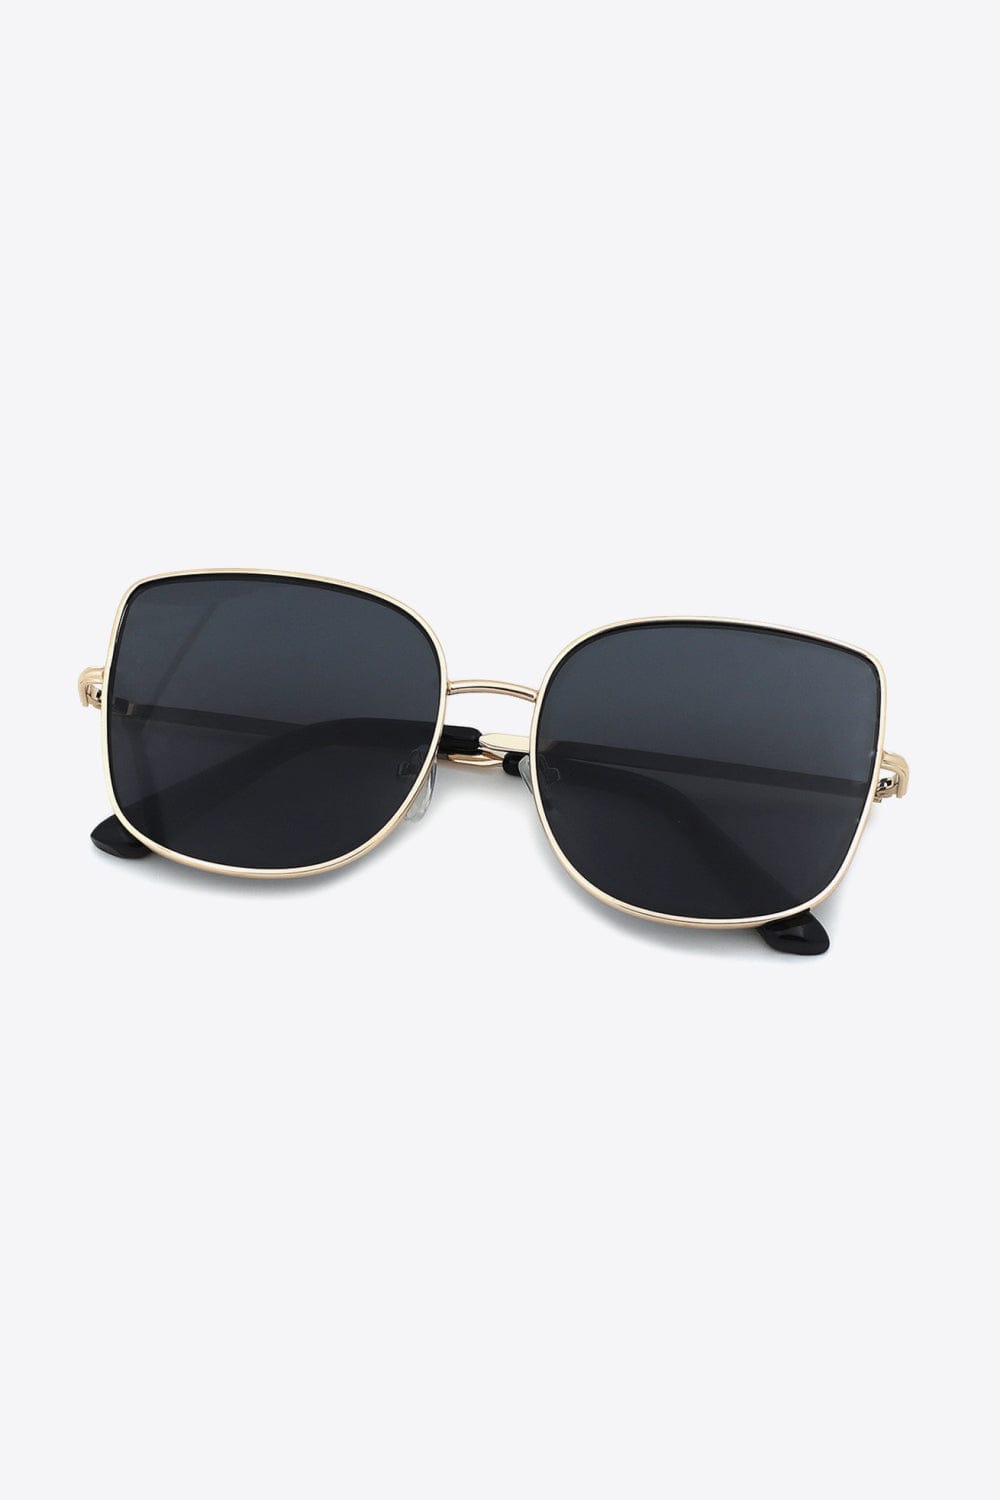 The802Gypsy sunglasses Black / One Size GYPSY-Metal Frame Wayfarer Sunglasses